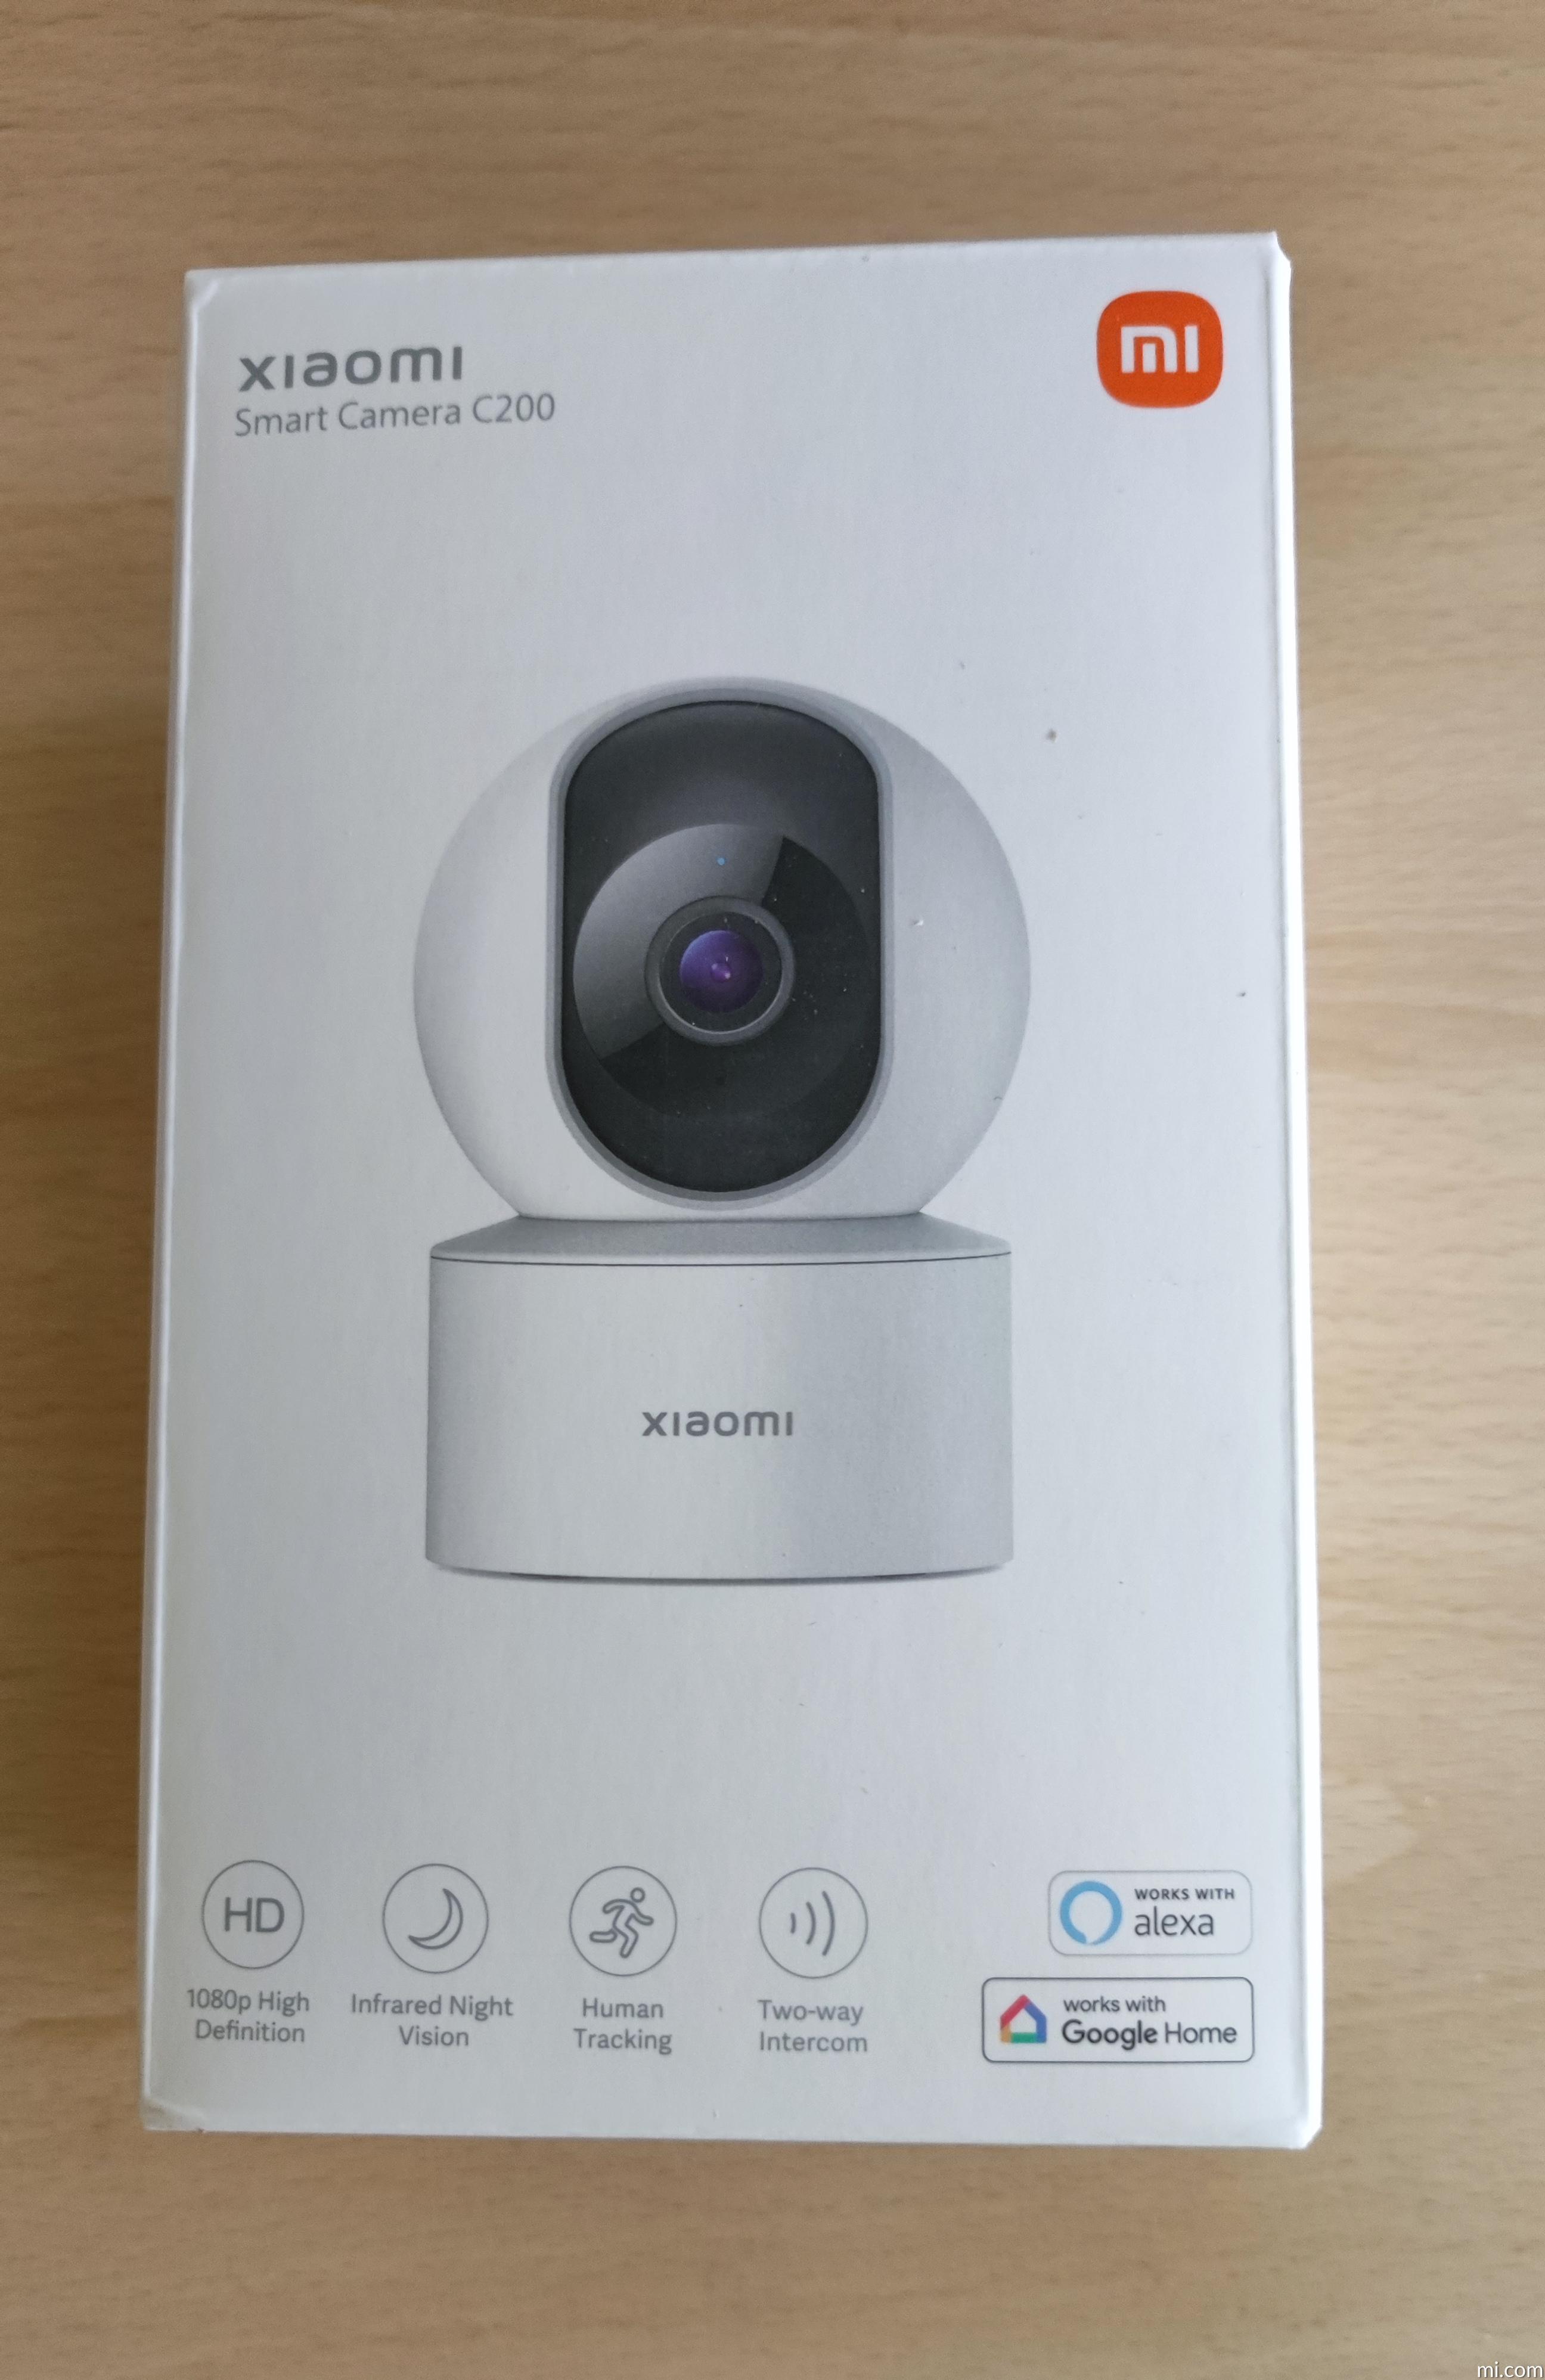 Oferta cámara vigilancia Xiaomi Smart Camera C200 - SaveMoney Blog